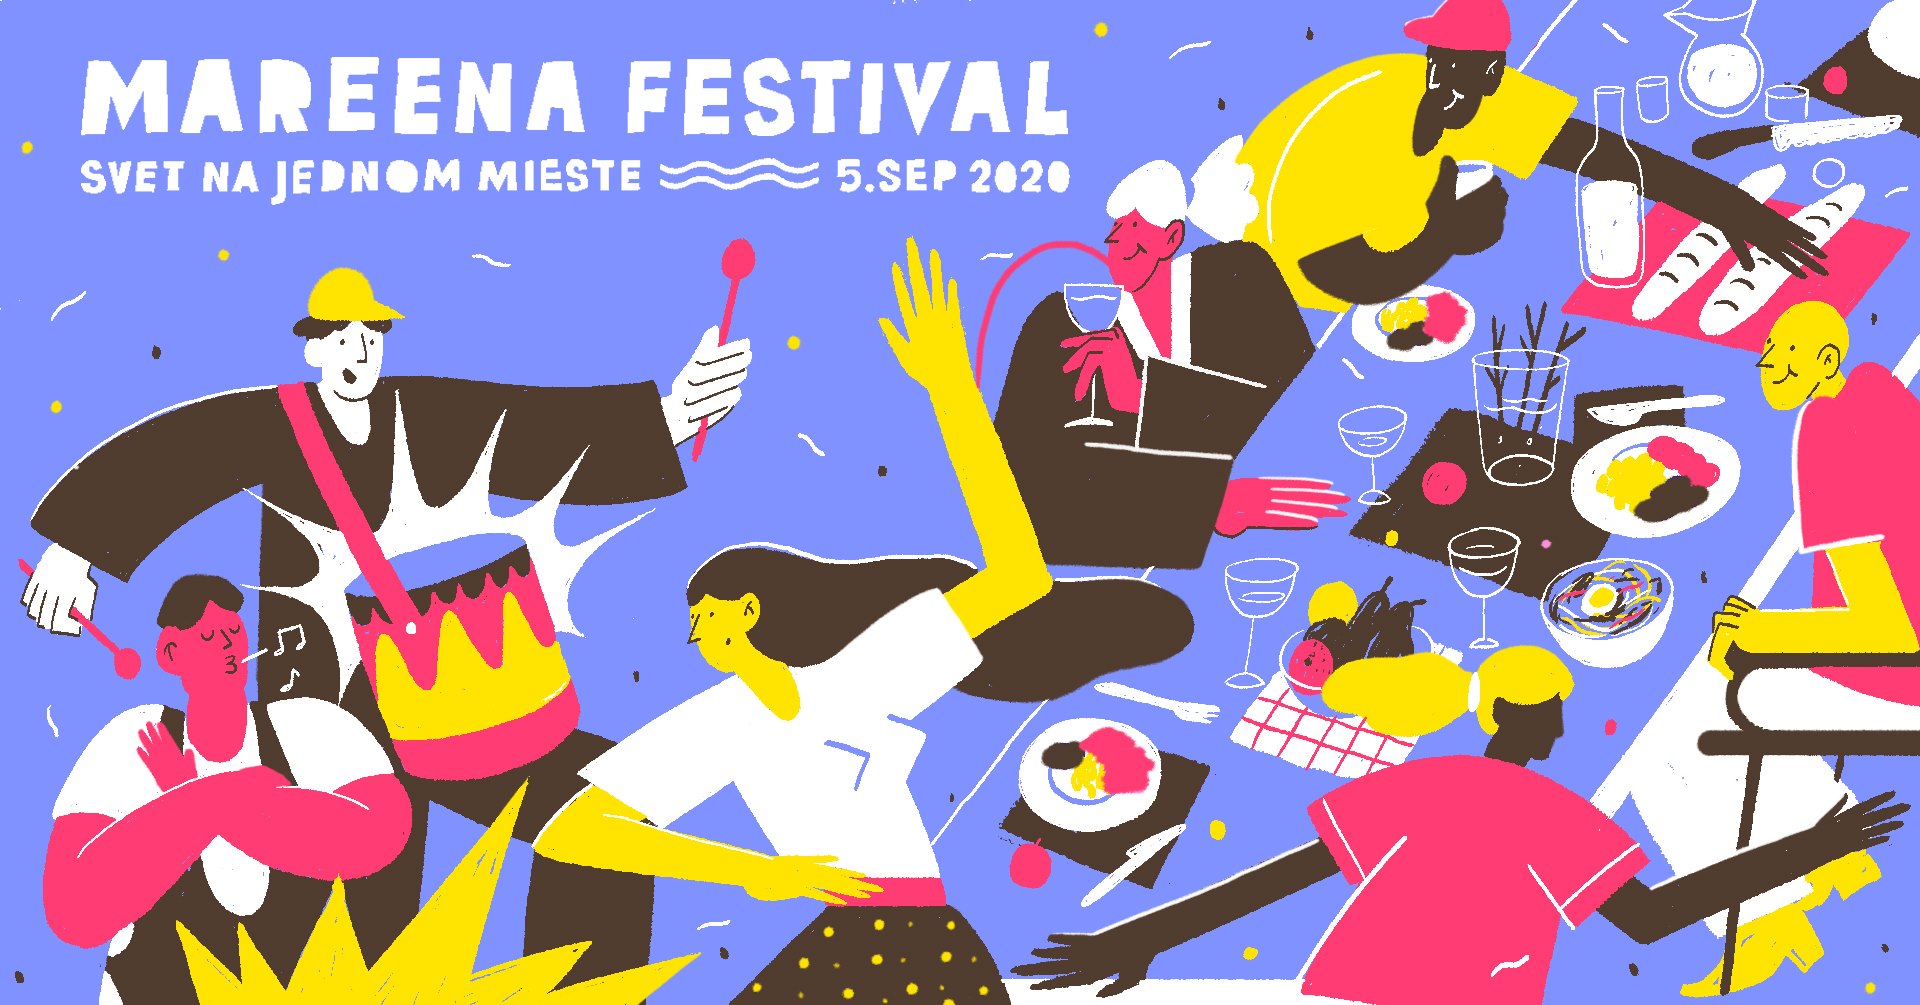 Mareena festival 2020